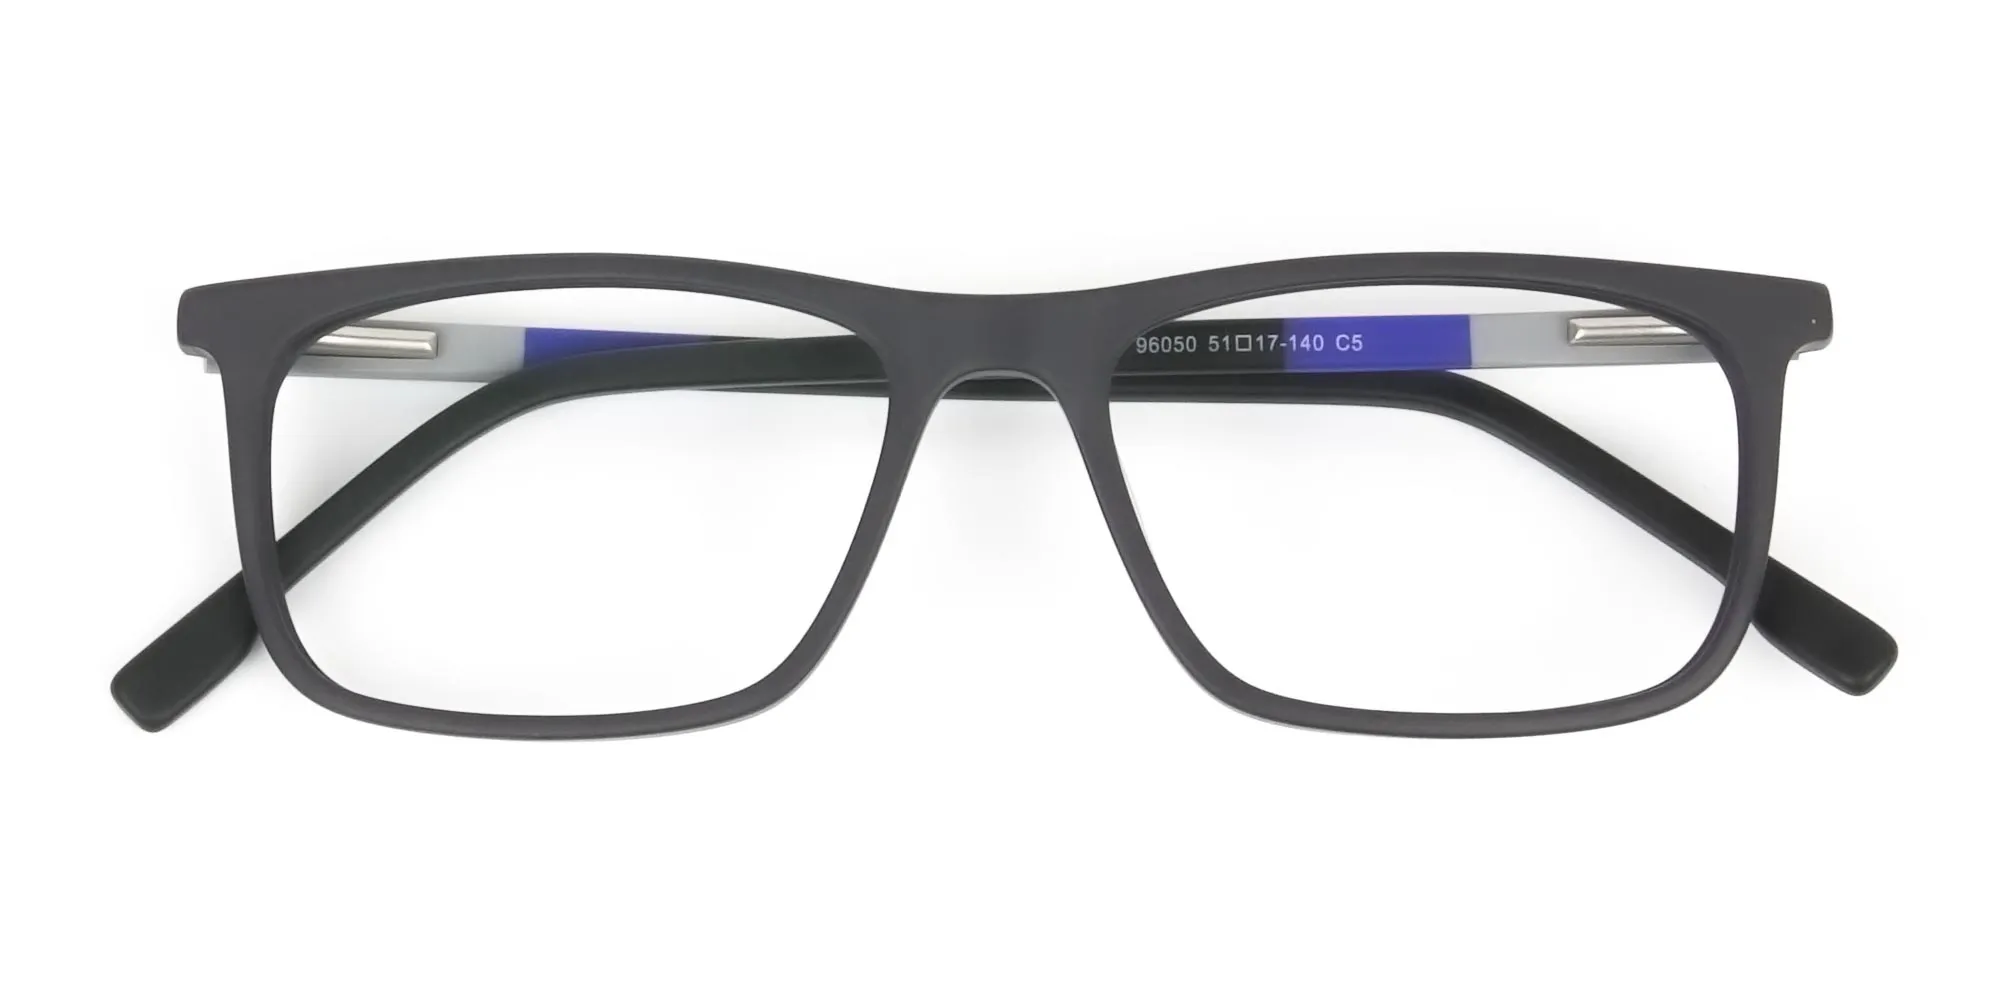 Matte Black & Blue Spectacles in Rectangular - 2